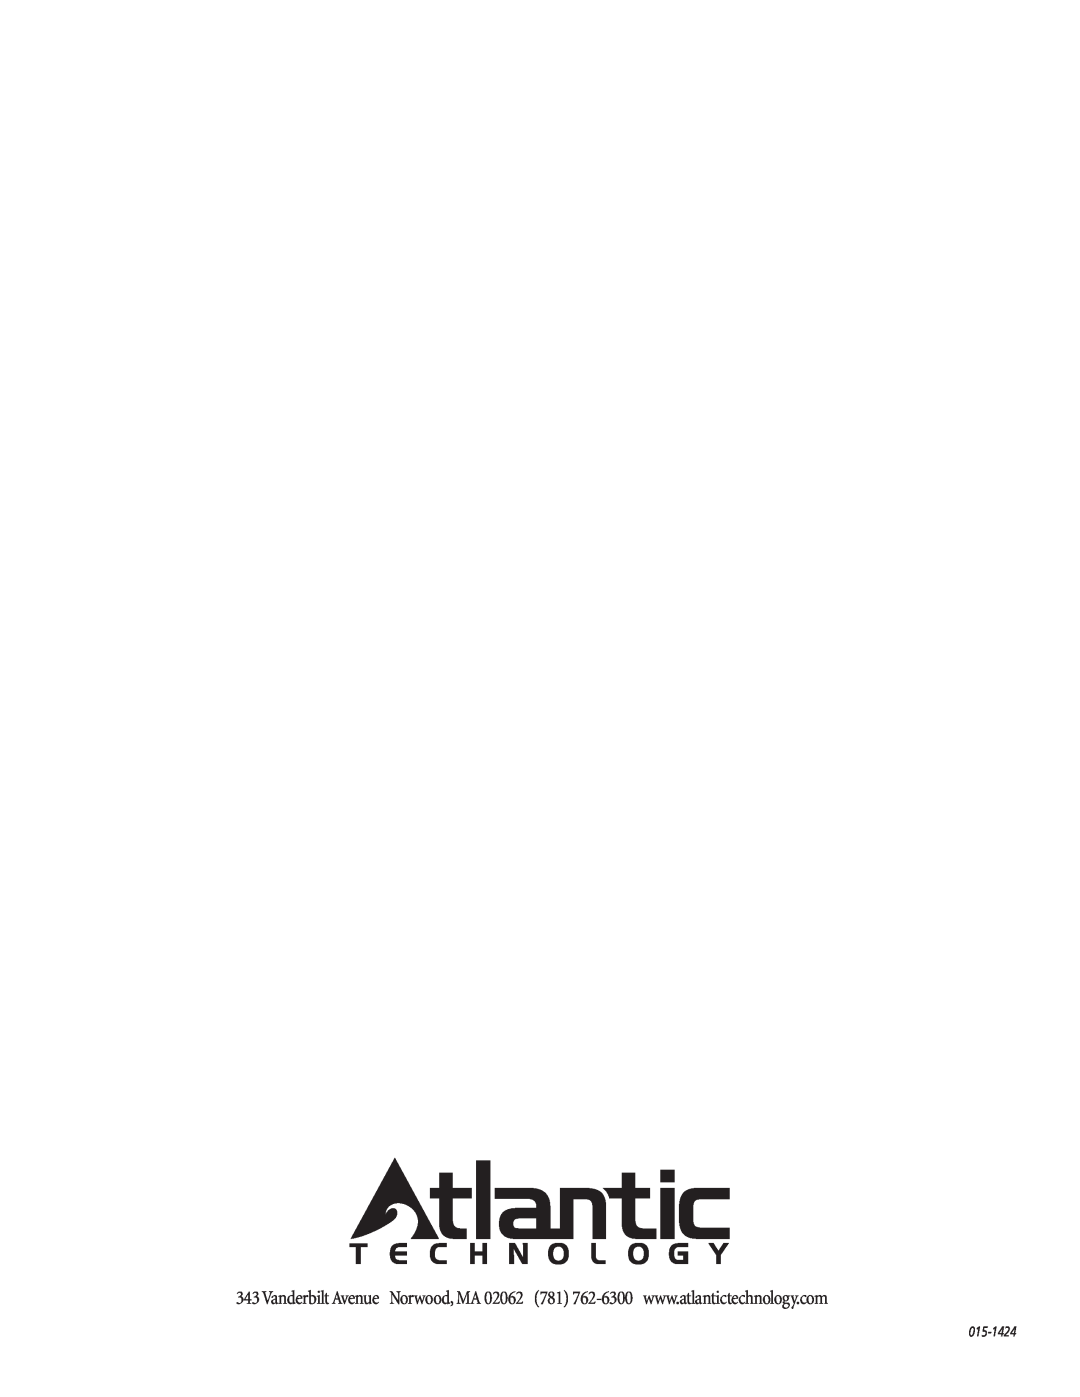 Atlantic Technology AW-424 instruction manual 015-1424 